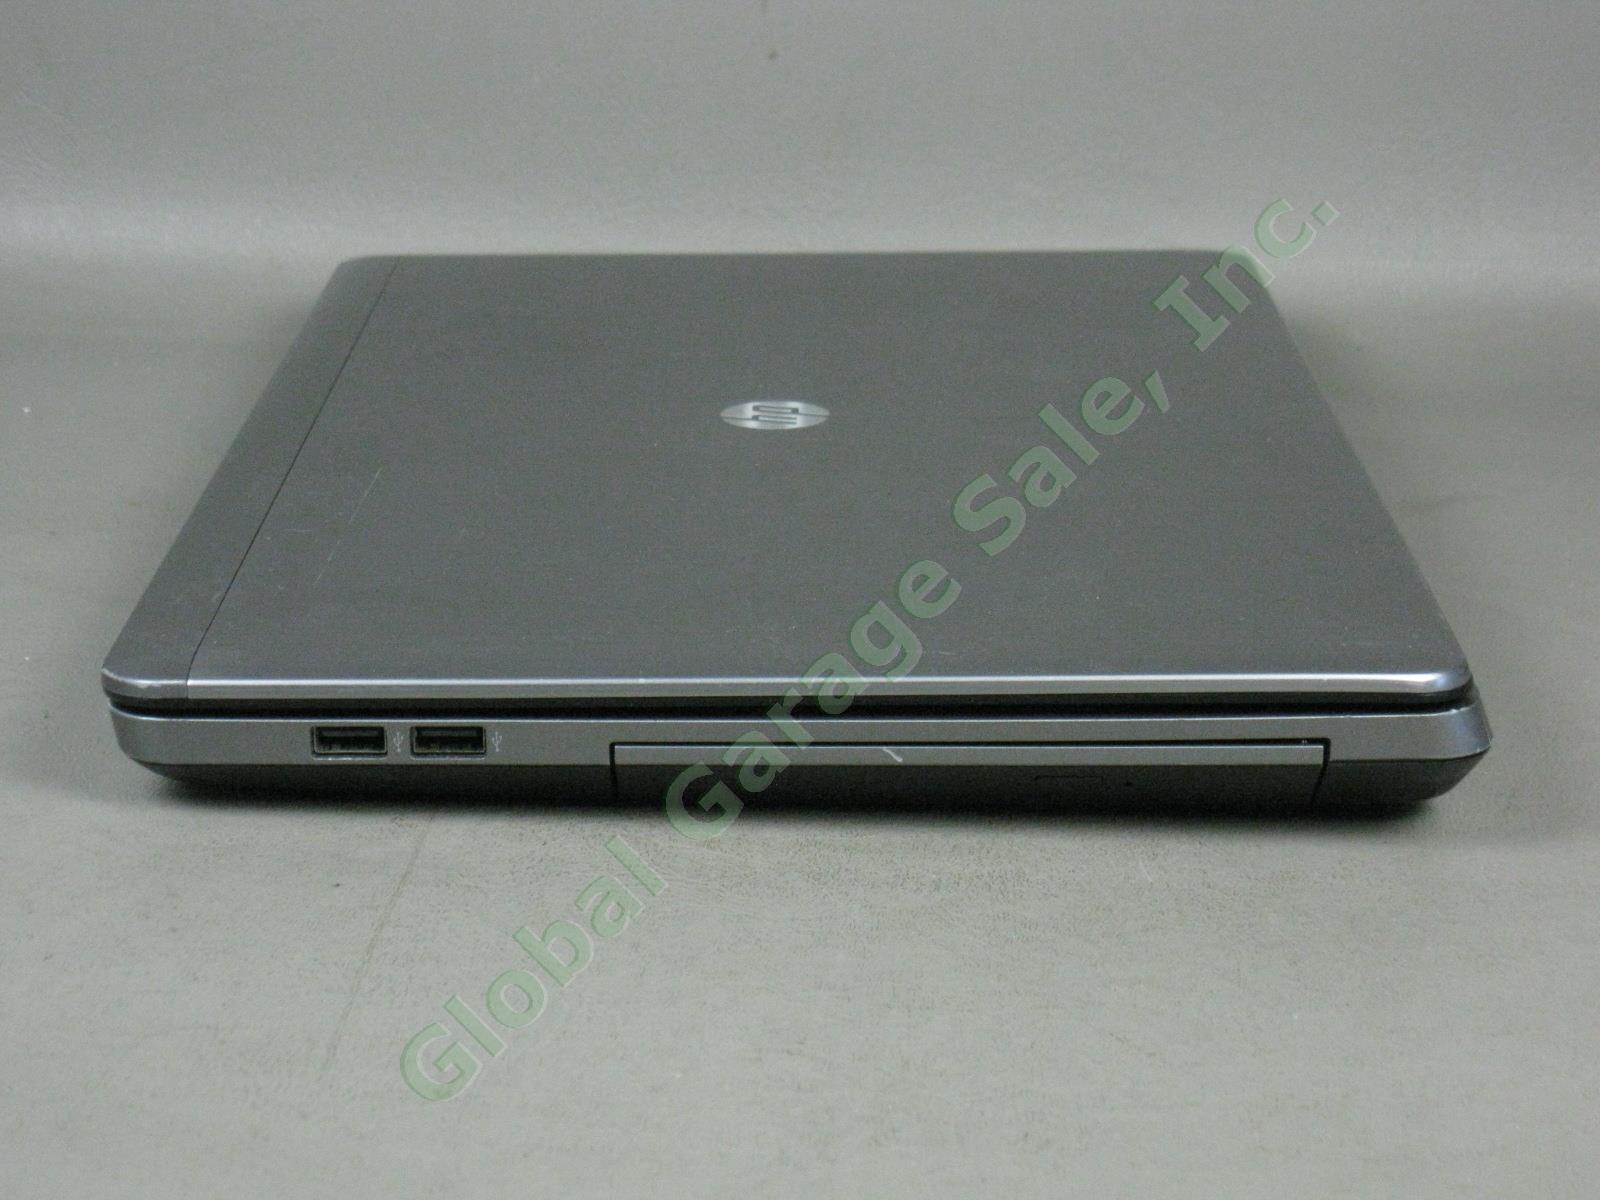 HP ProBook 4540s Laptop Computer Intel i5 2.60GHz 300GB HDD 4GB RAM Win 10 Pro 4